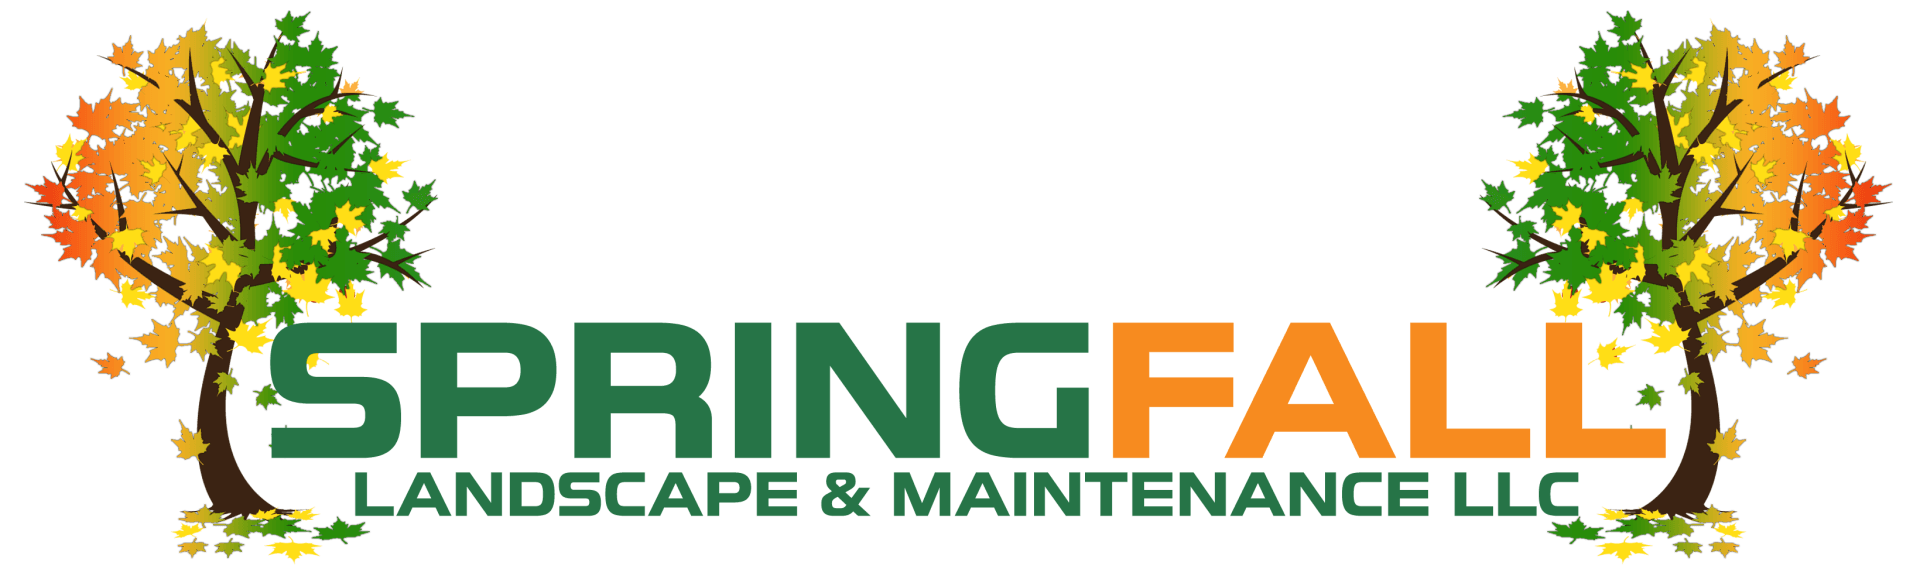 Springfall Landscape & Maintenance LLC